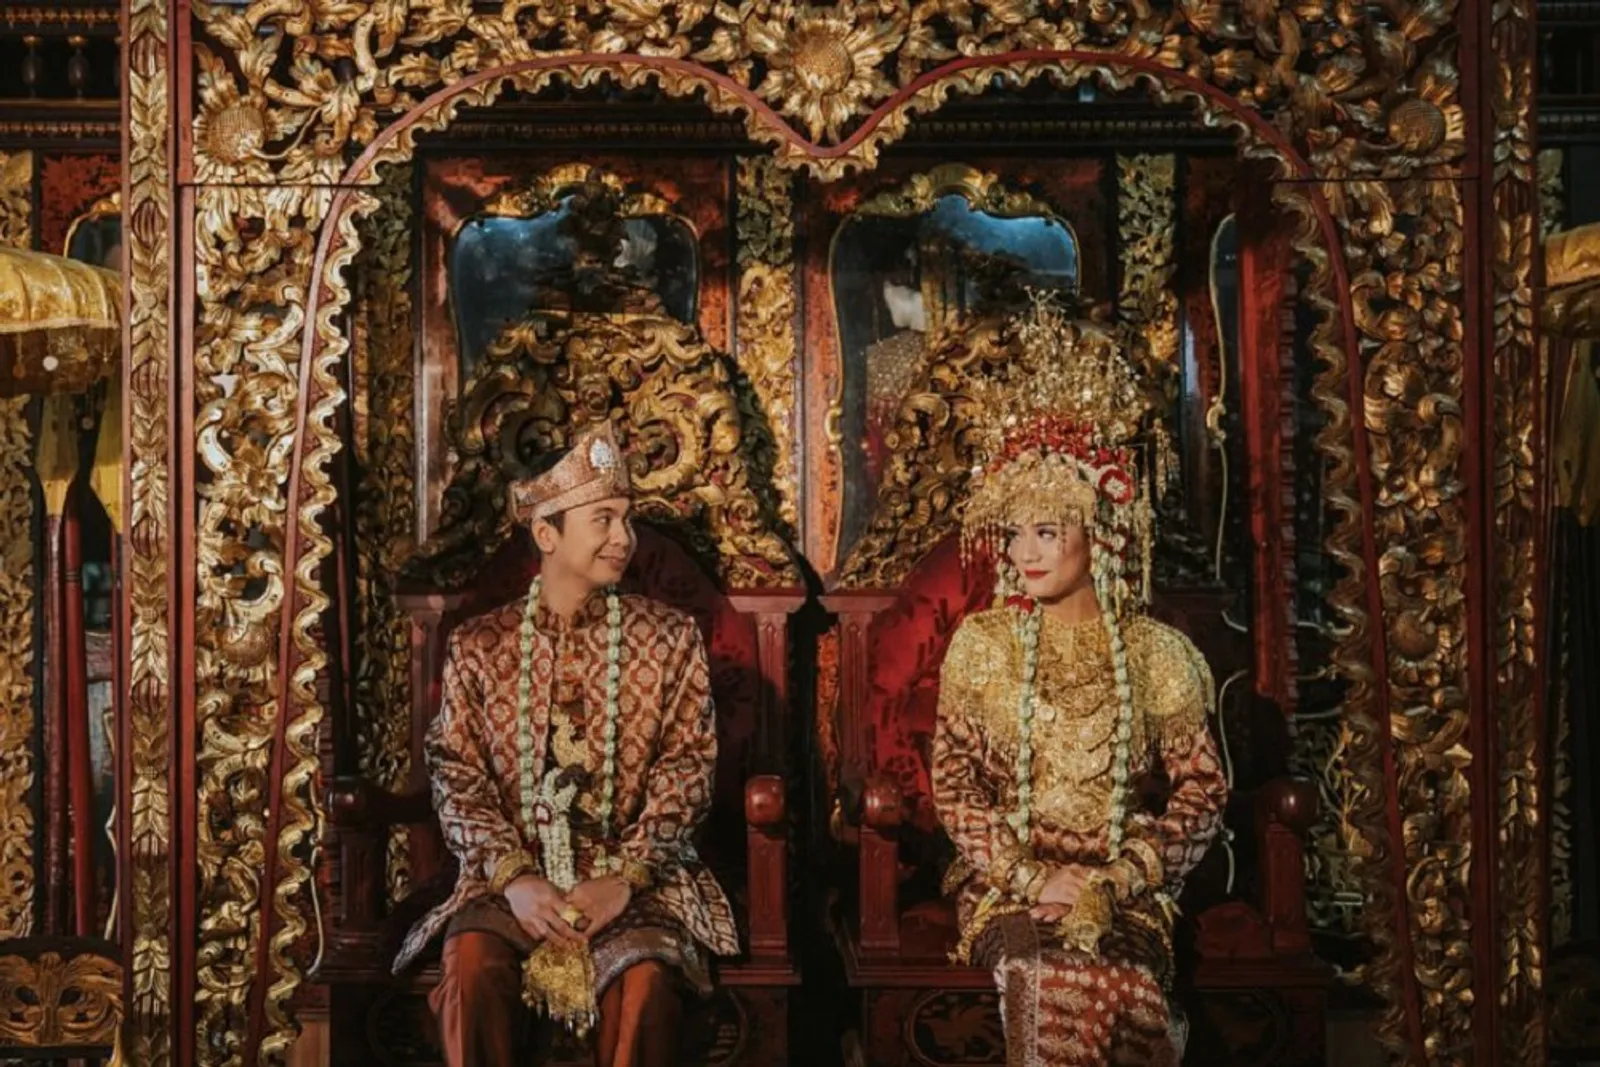 Unik nan Kocak, Intip 10 Potret Pre-Wedding Komika Indonesia